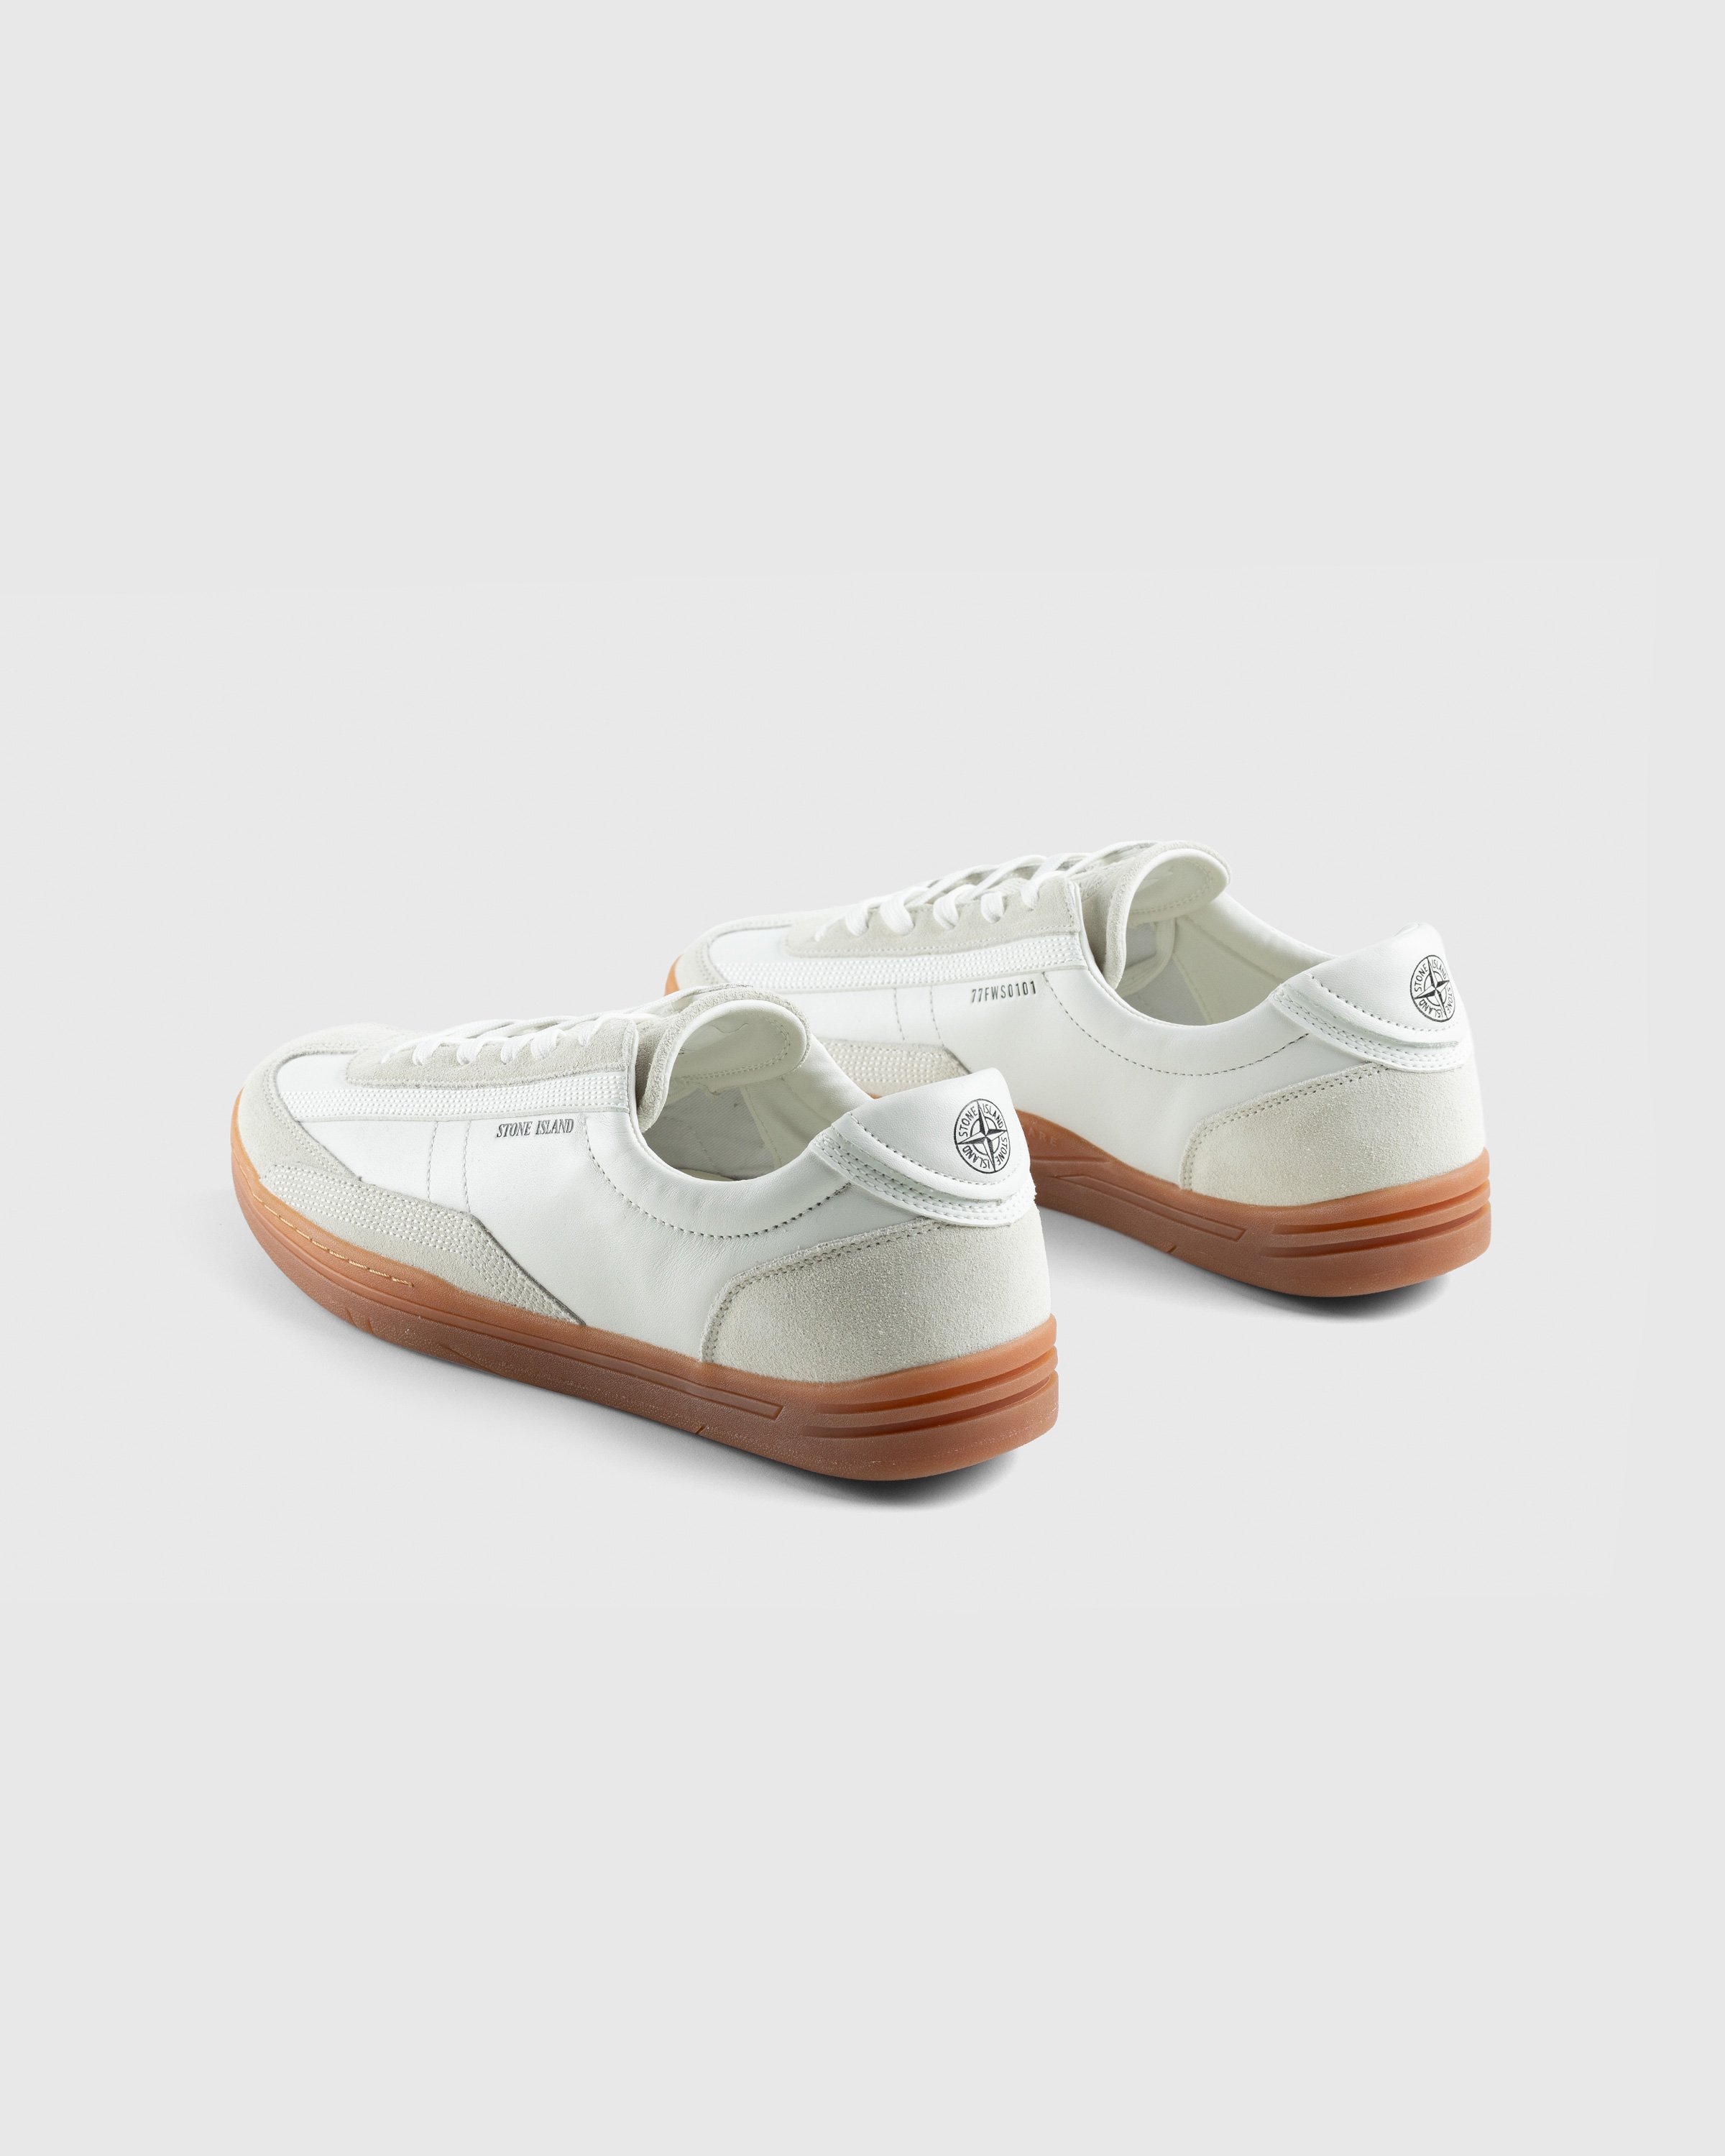 Stone Island - Rock Sneaker White - Footwear - White - Image 4